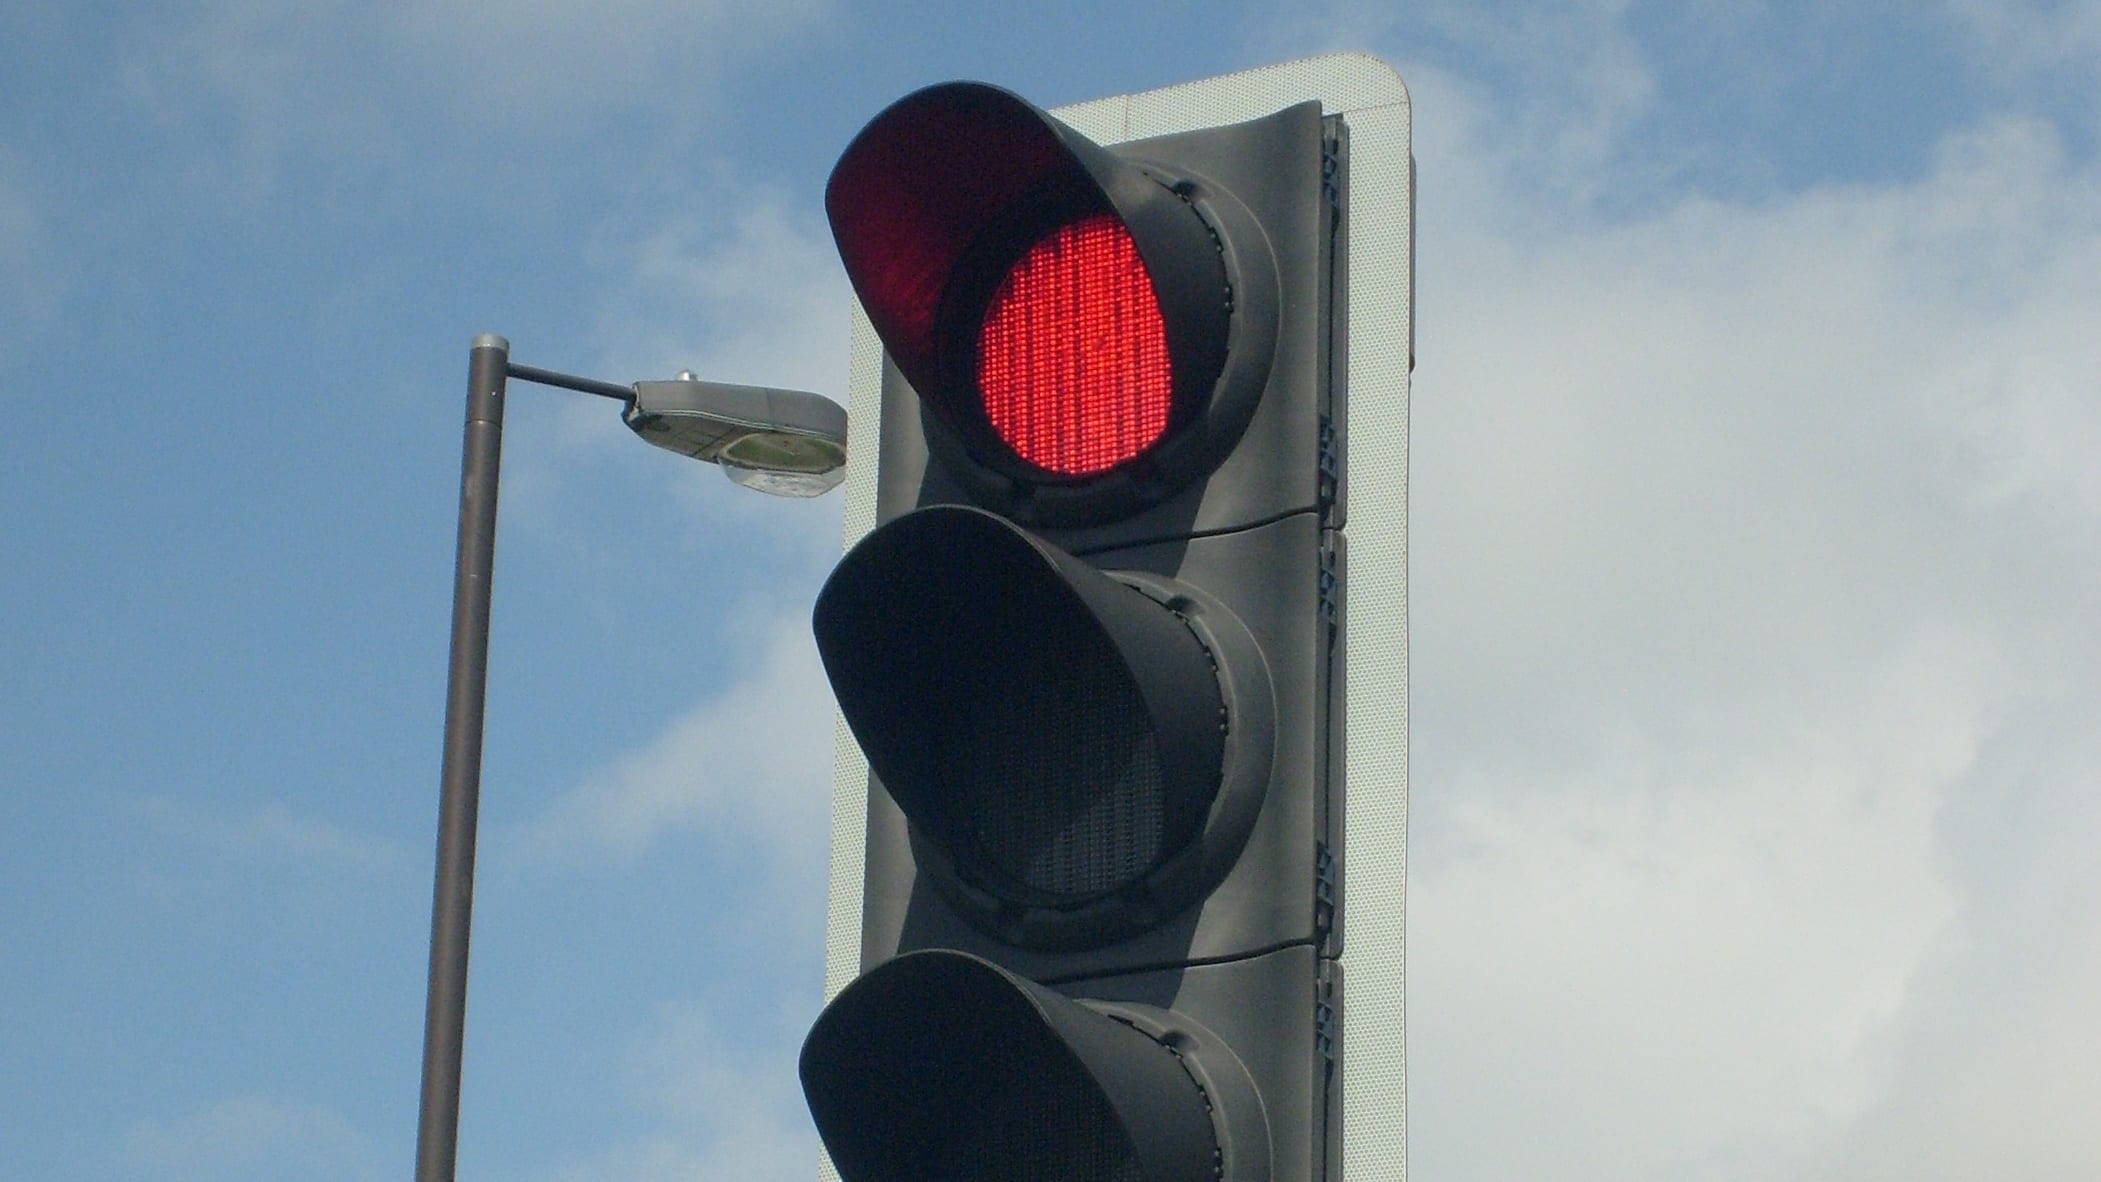 Multiplexing Principles using Traffic Lights